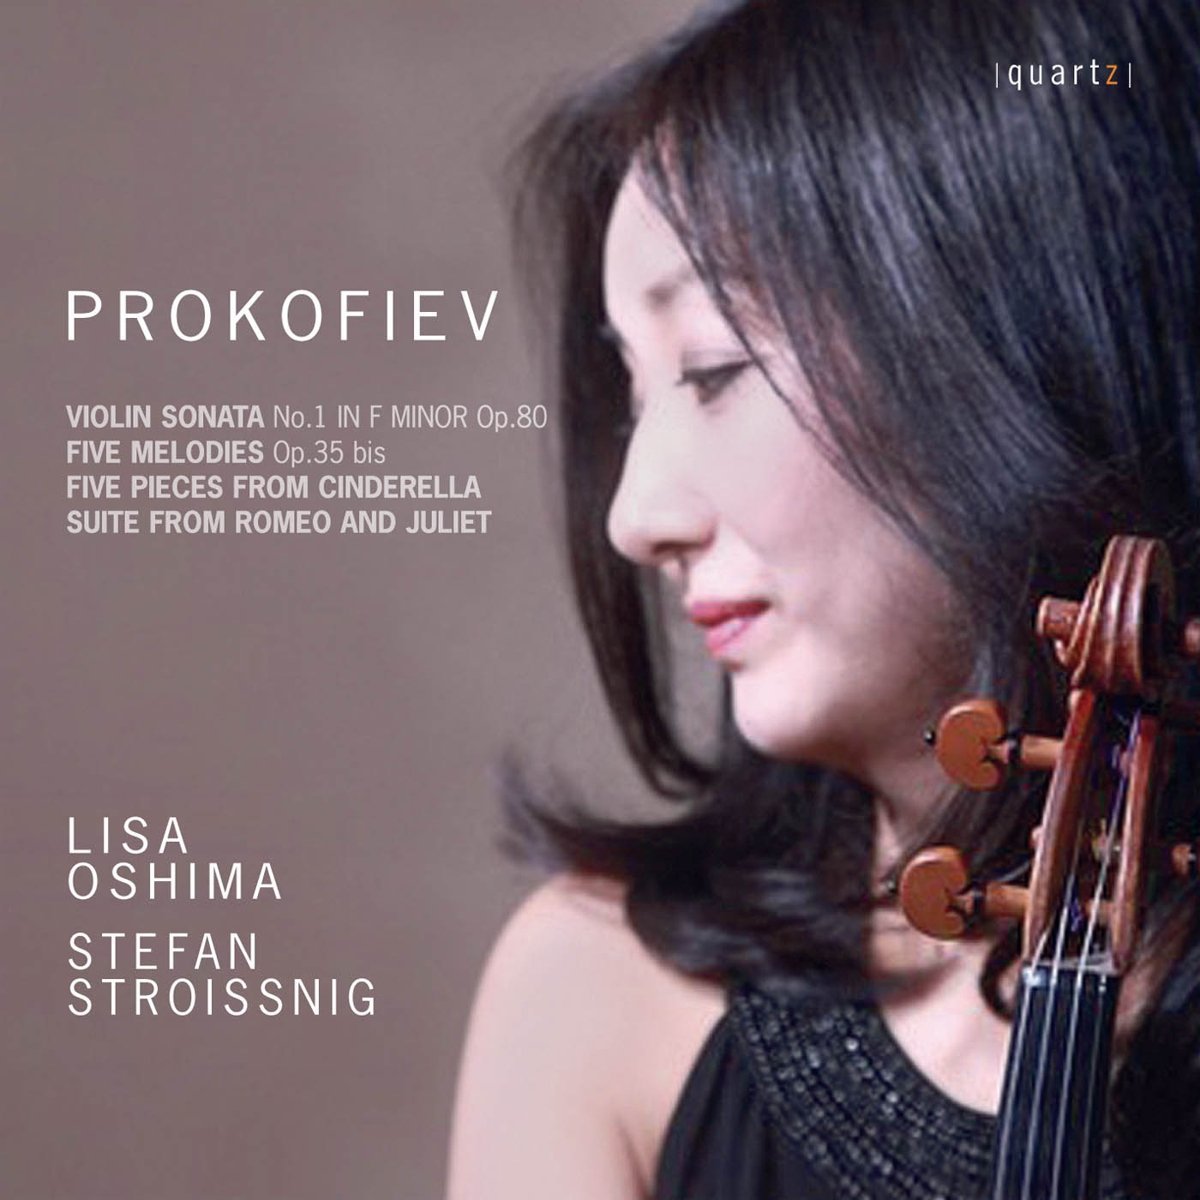 Lisa Oshima's Prokofiev